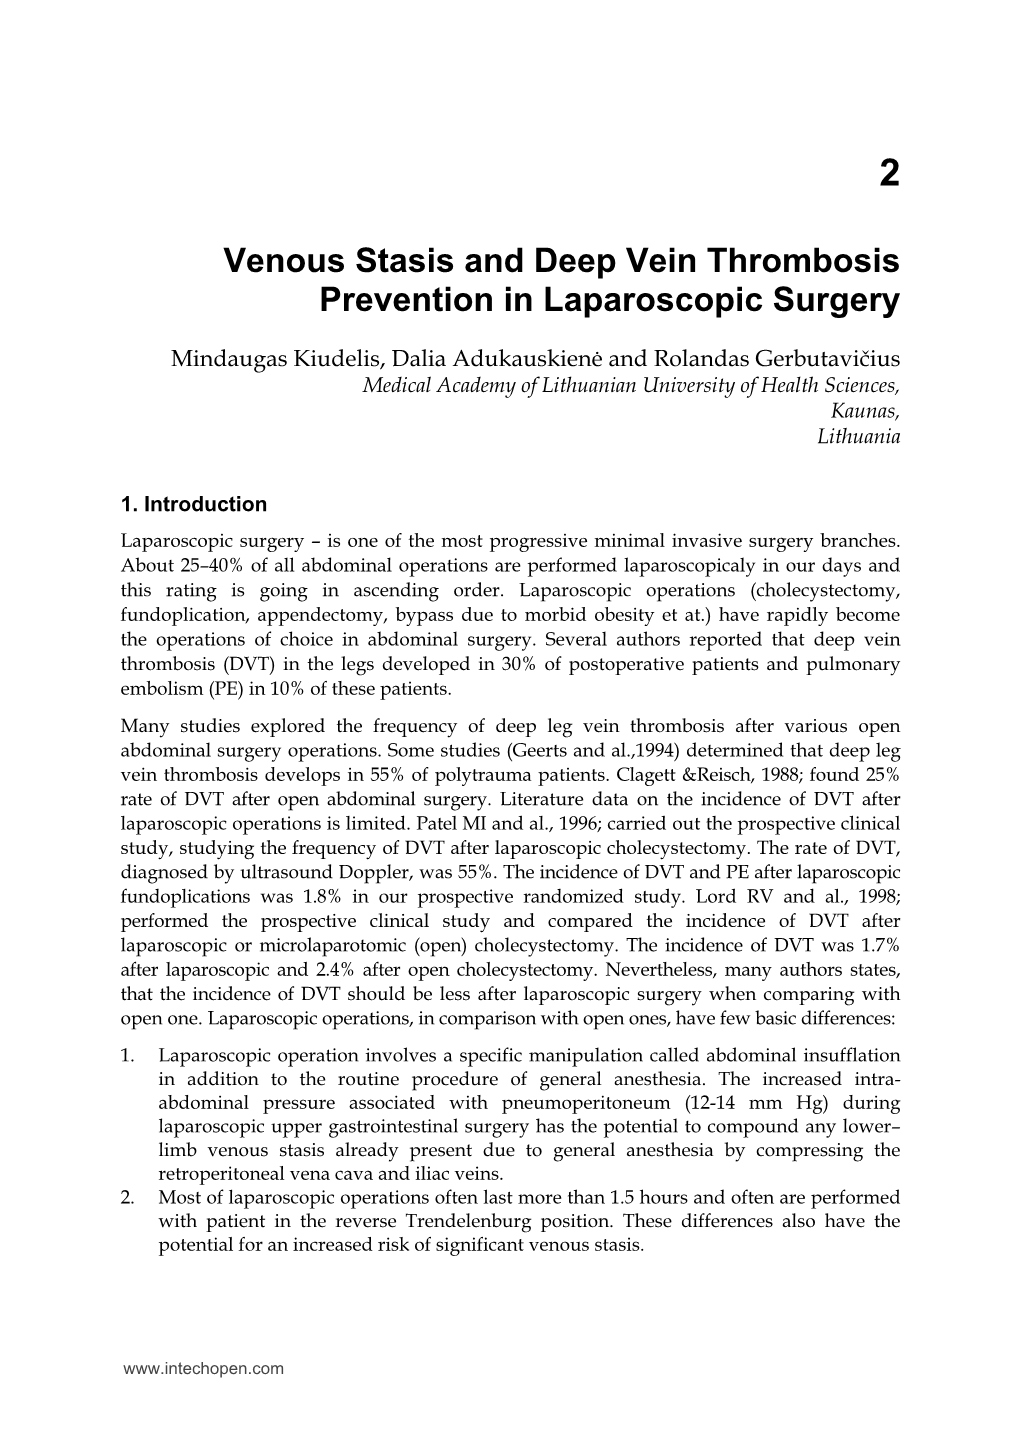 Venous Stasis and Deep Vein Thrombosis Prevention in Laparoscopic Surgery